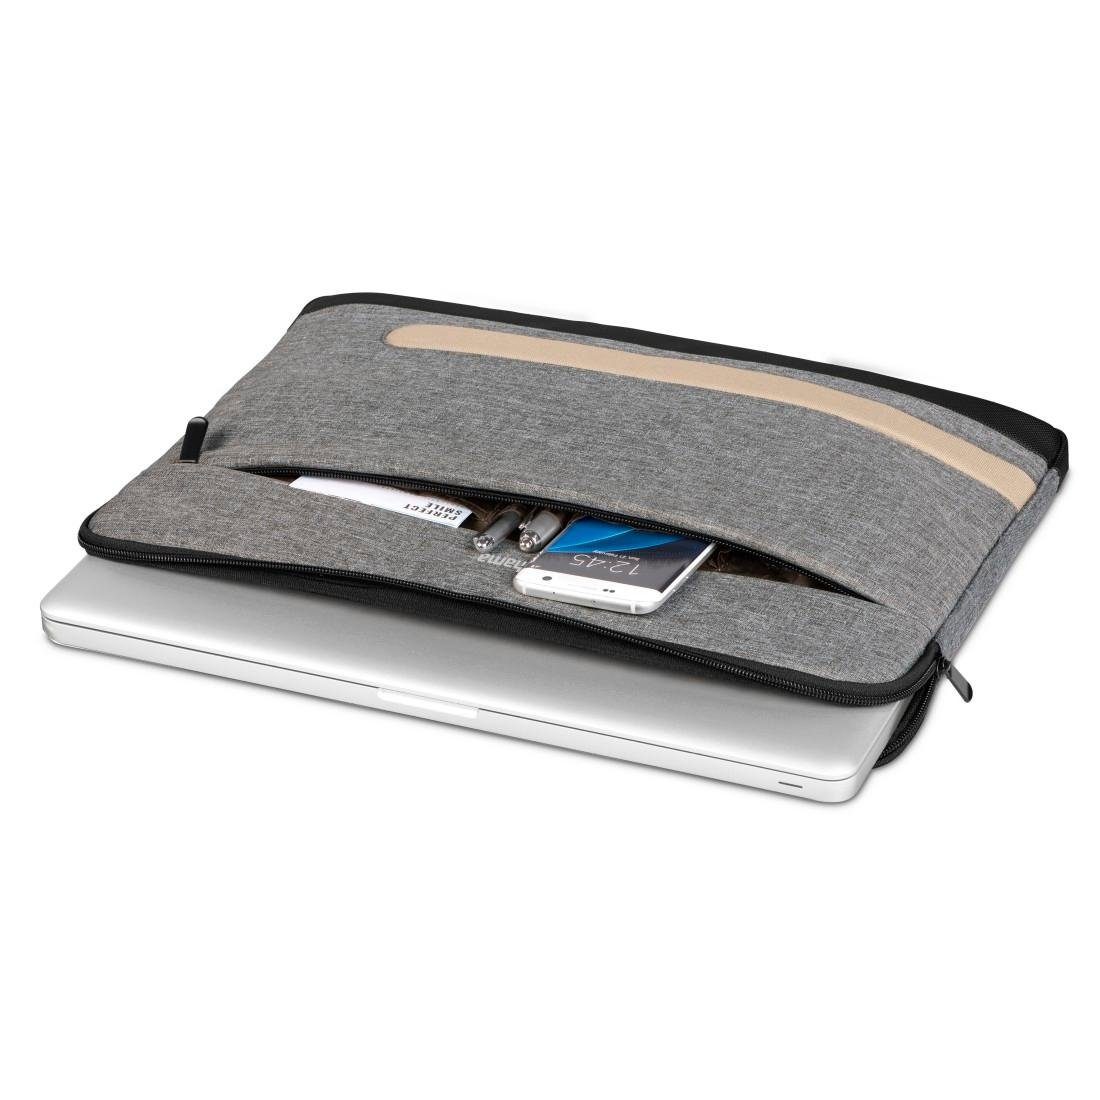 Sleeve, Laptoptasche (13,3) cm Notebook Sleeve Laptop Schutzhülle Hama bis 34